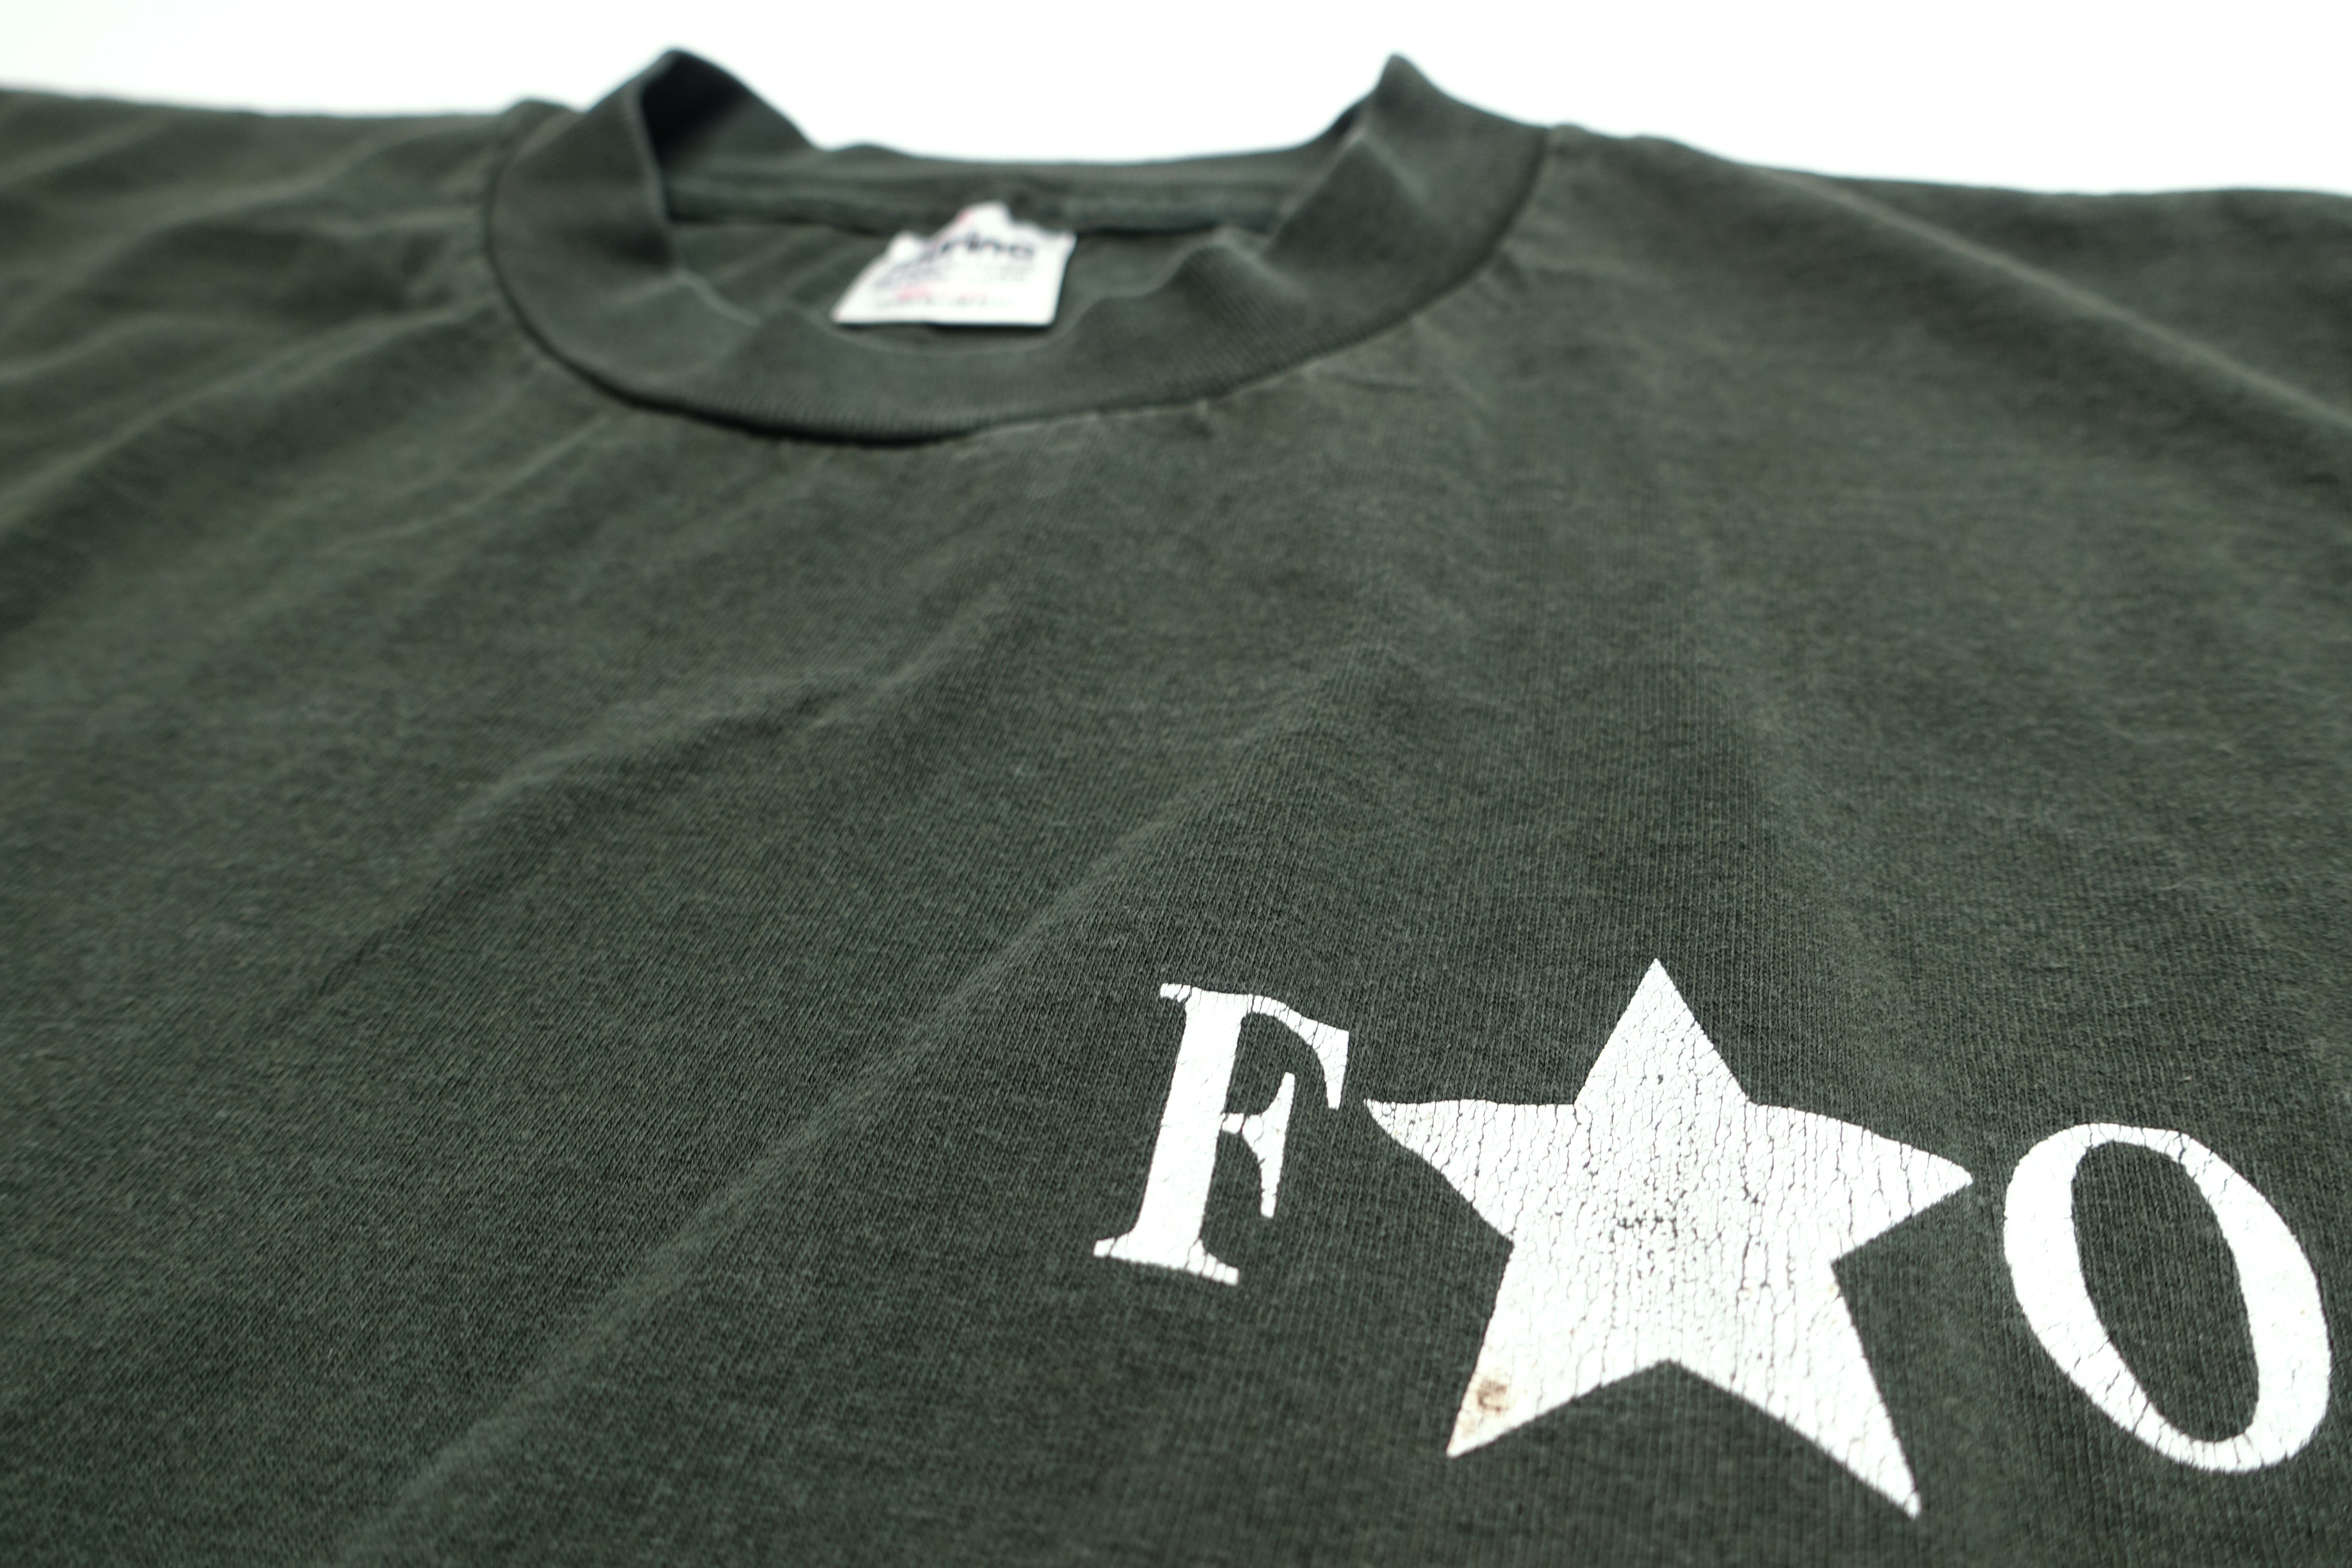 Funeral Oration ‎– F★O S/T 1995 Tour Shirt Size XL